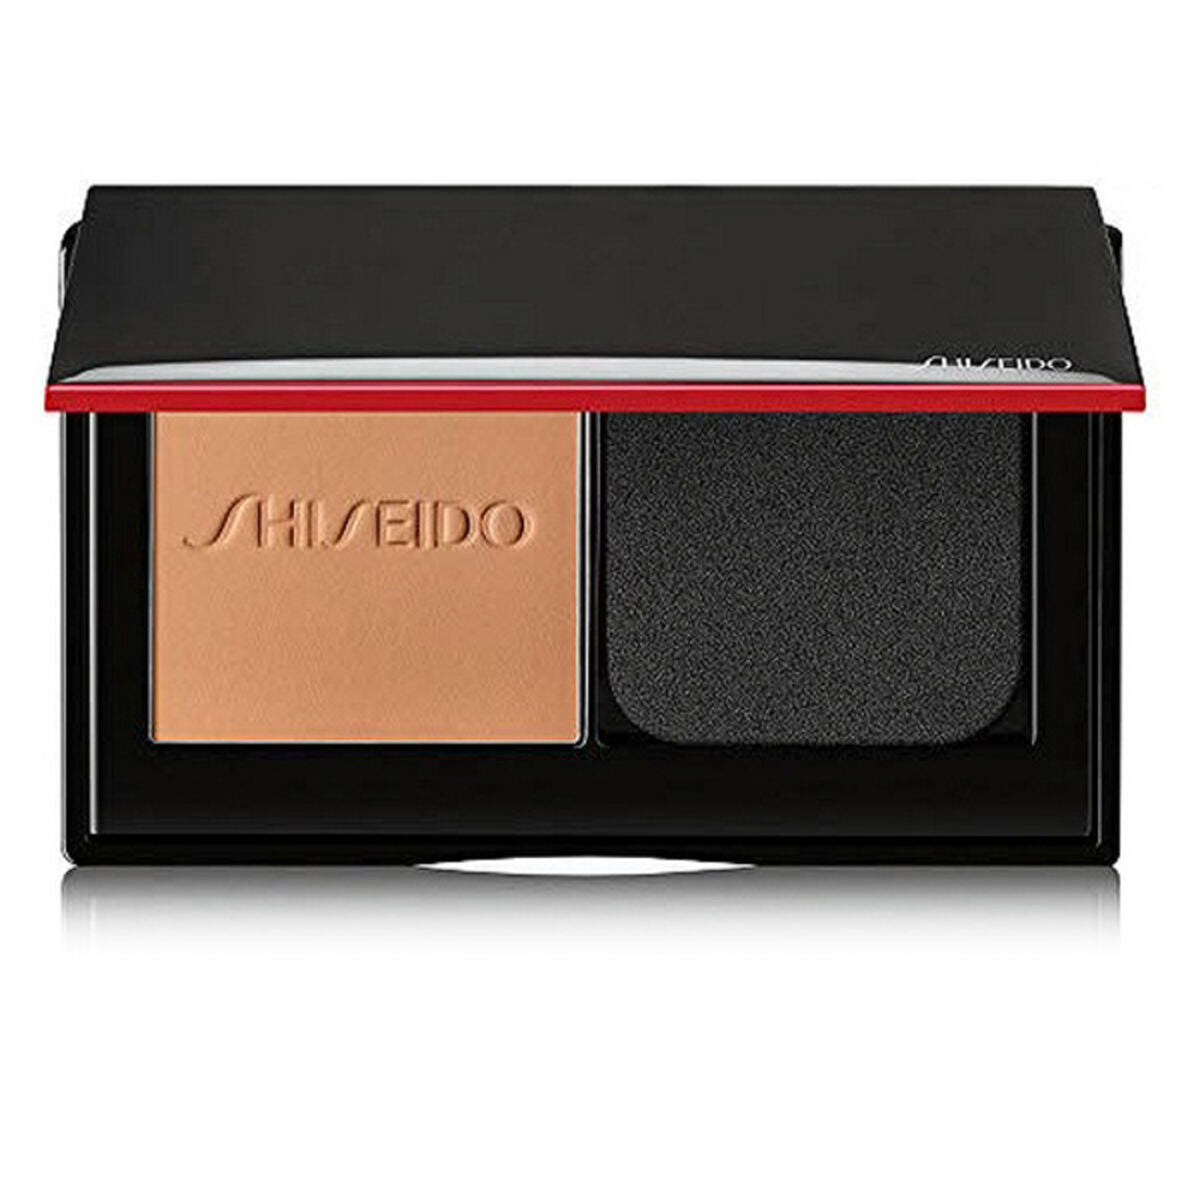 Pulver Make-up Base Synchro Skin Self-refreshing Shiseido